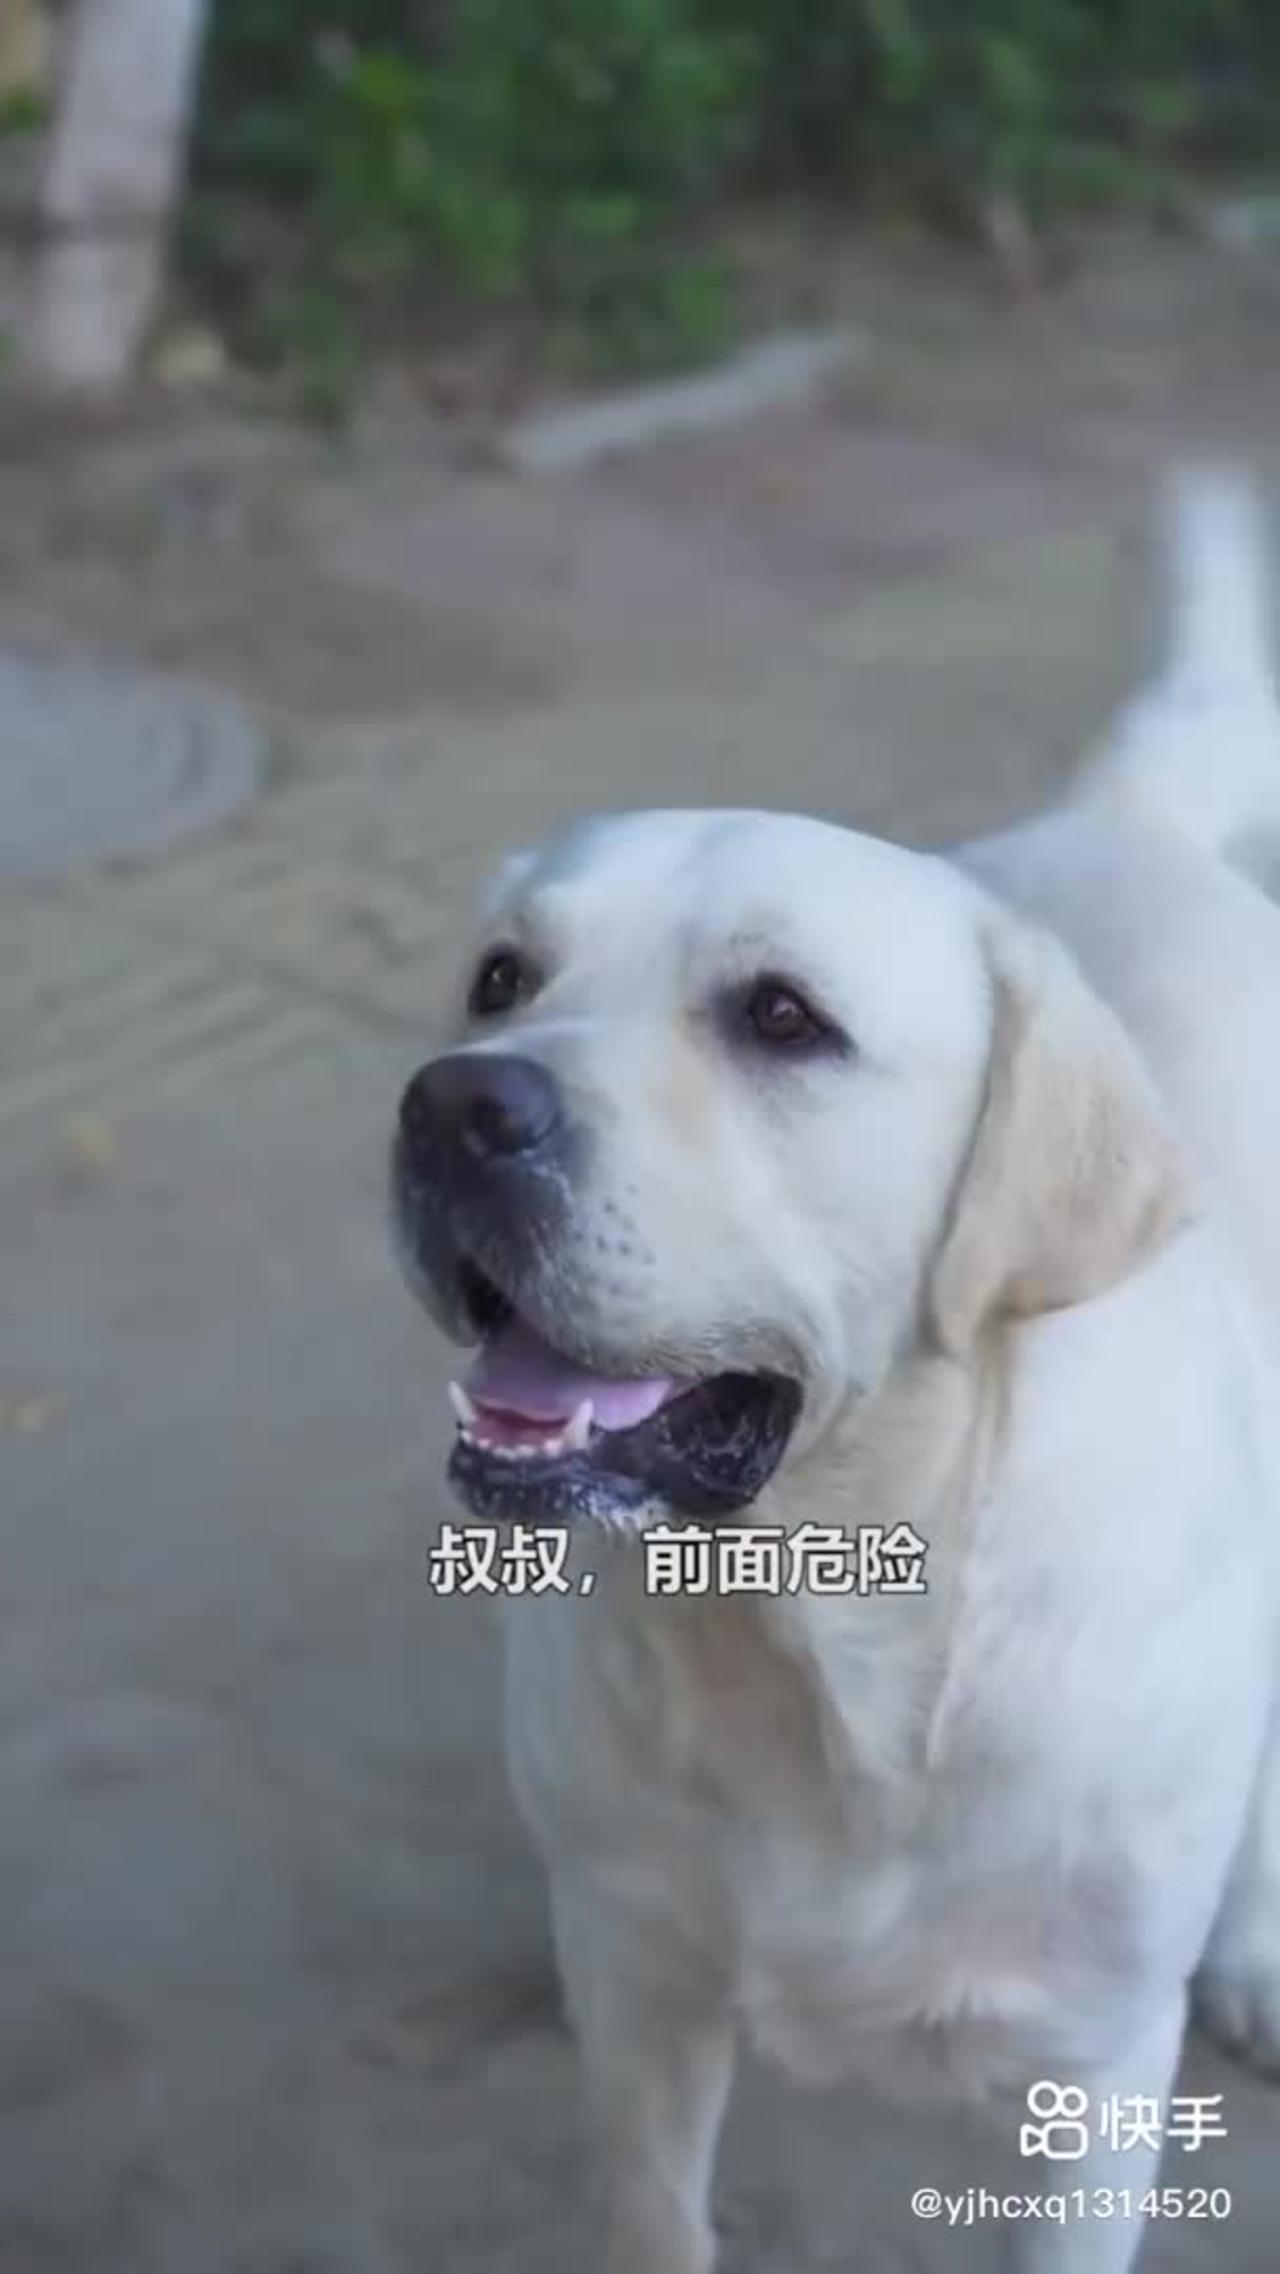 Dog save blind man life👍